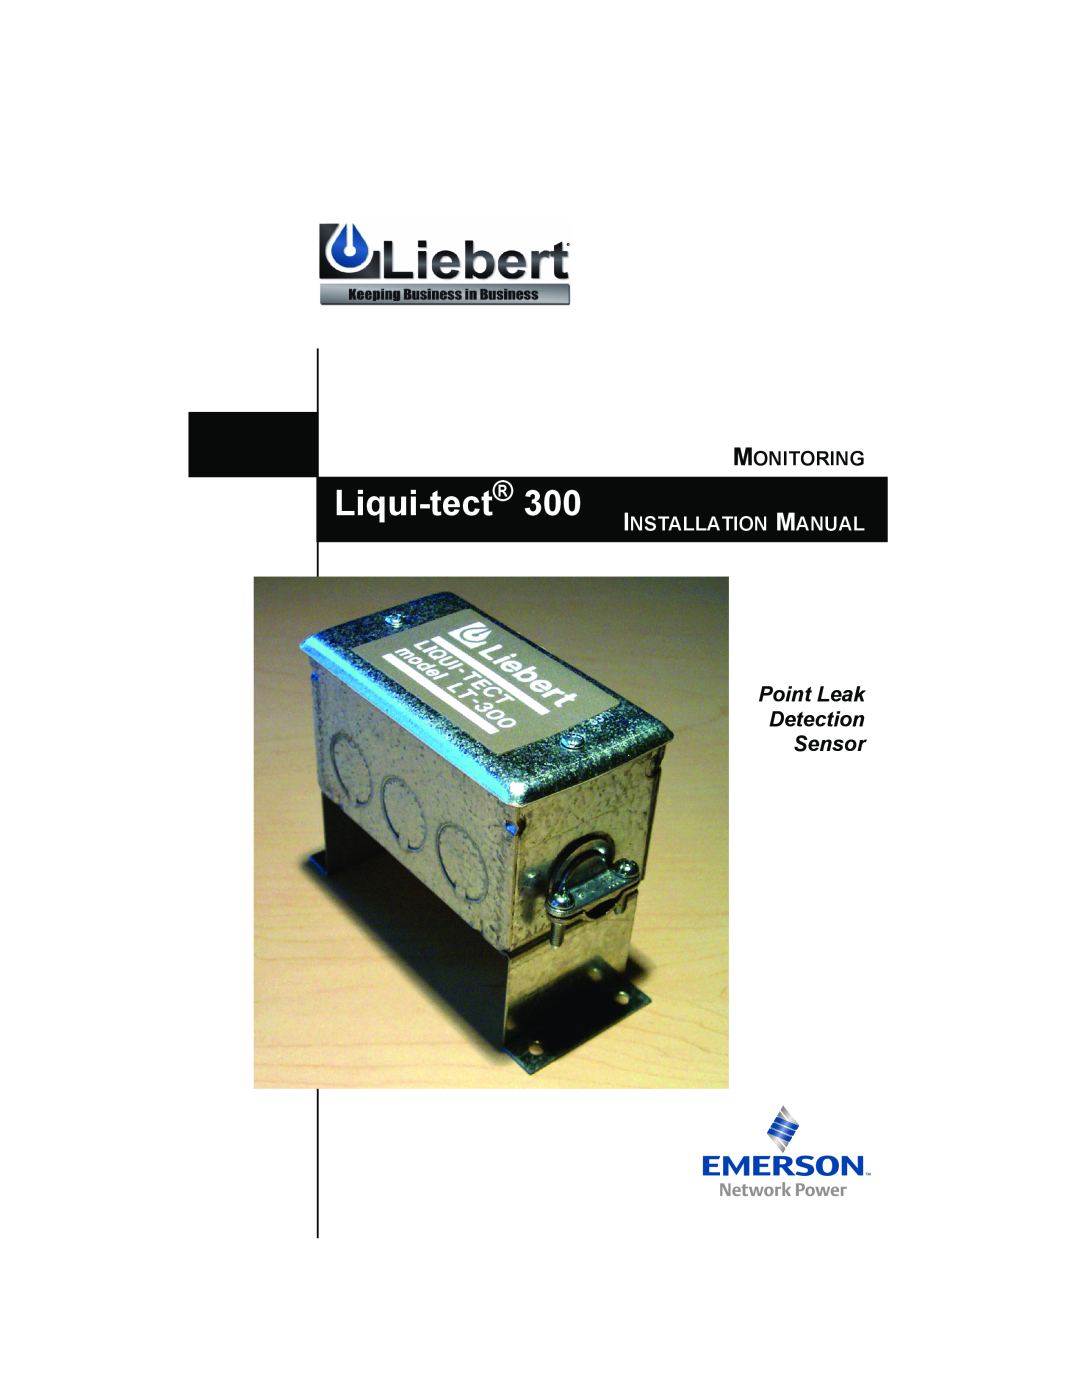 Liebert 300 installation manual Liqui-tect, Point Leak Detection Sensor, Monitoring, Installation Manual 